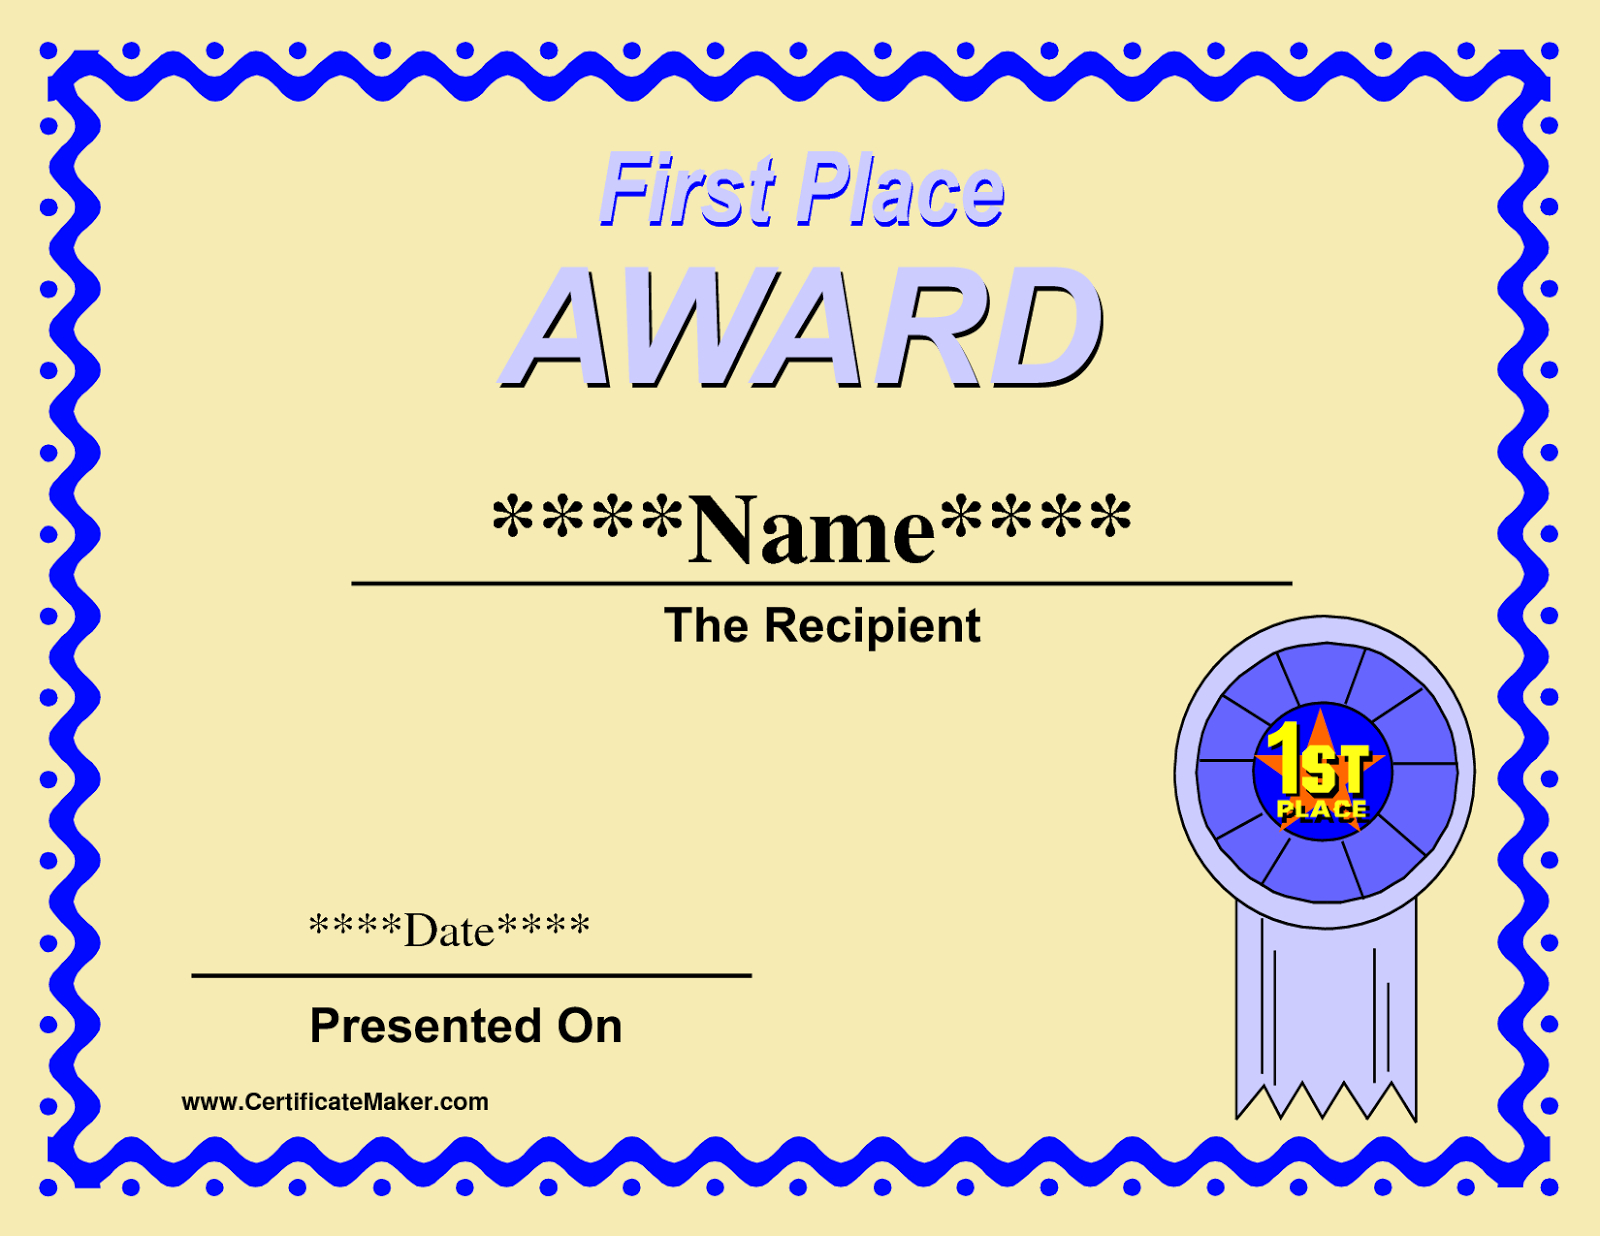 Printable Winner Certificate Templates | Certificate Within First Place Award Certificate Template